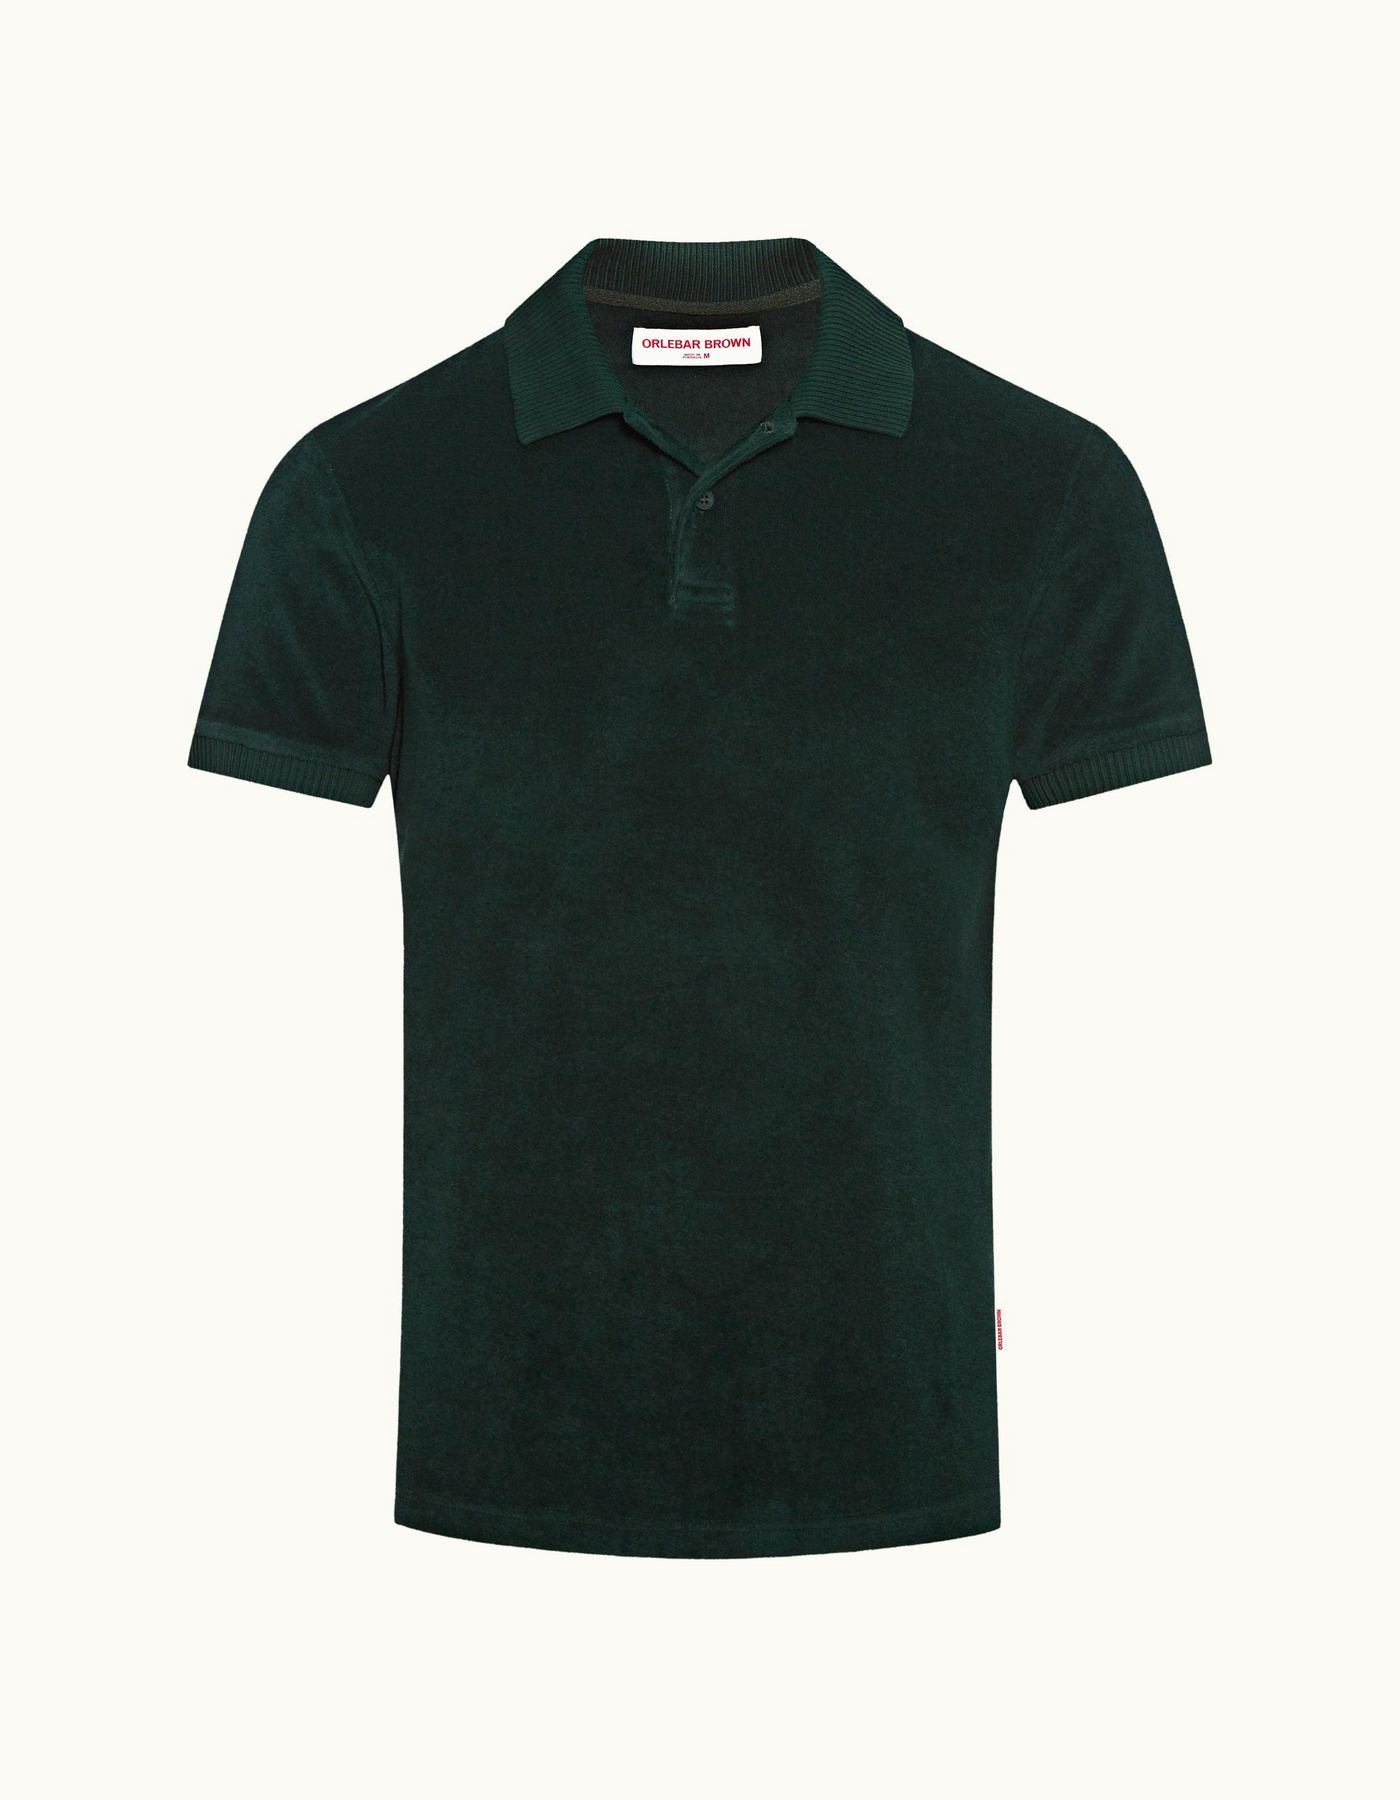 Jarrett Towelling - Mens Racing Green Classic Fit Cotton Towelling Polo Shirt